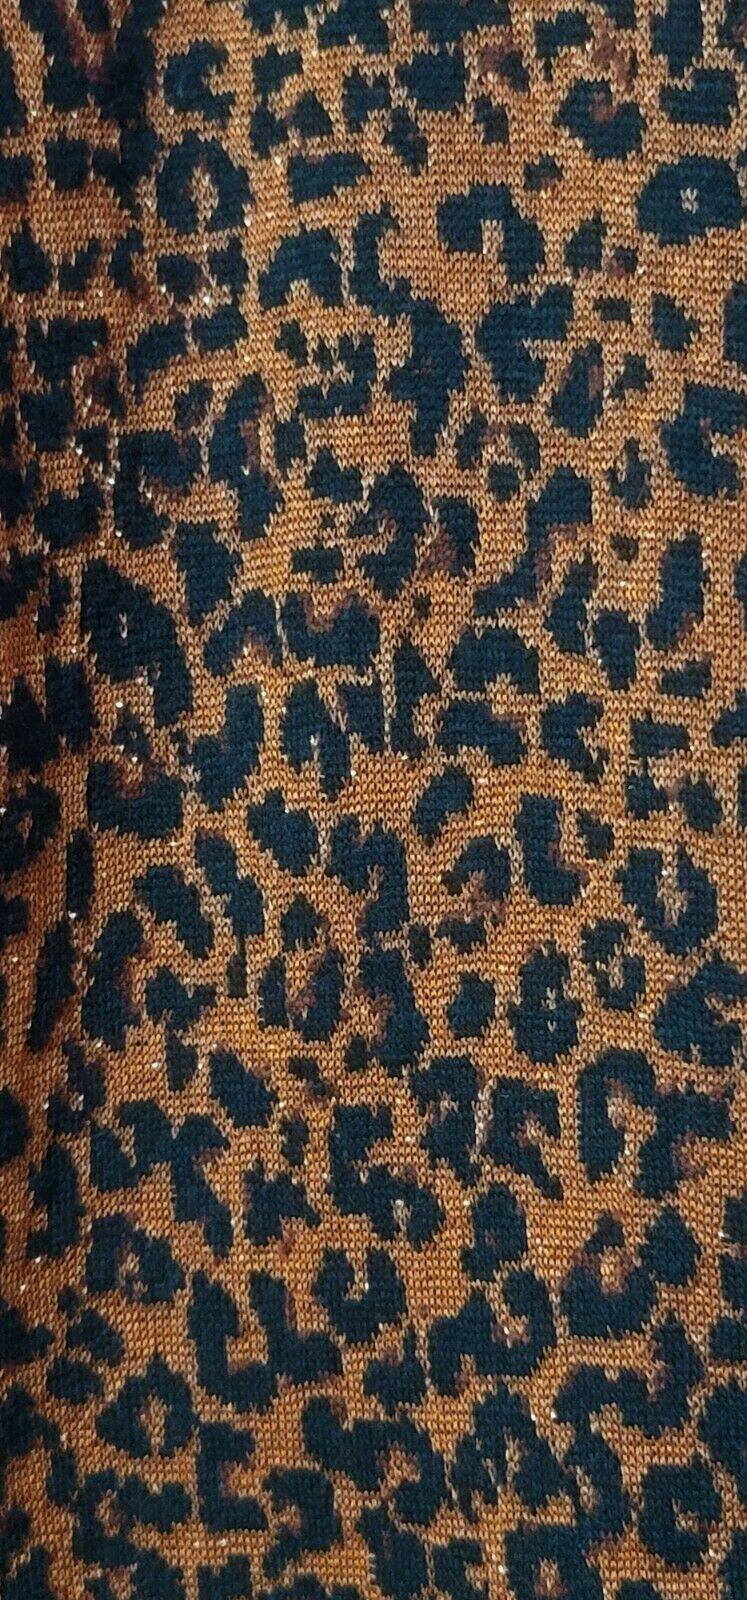 Zara Metallic Leopard Print Knit High Rise Waist Crop Pant Stretch Medium - SVNYFancy